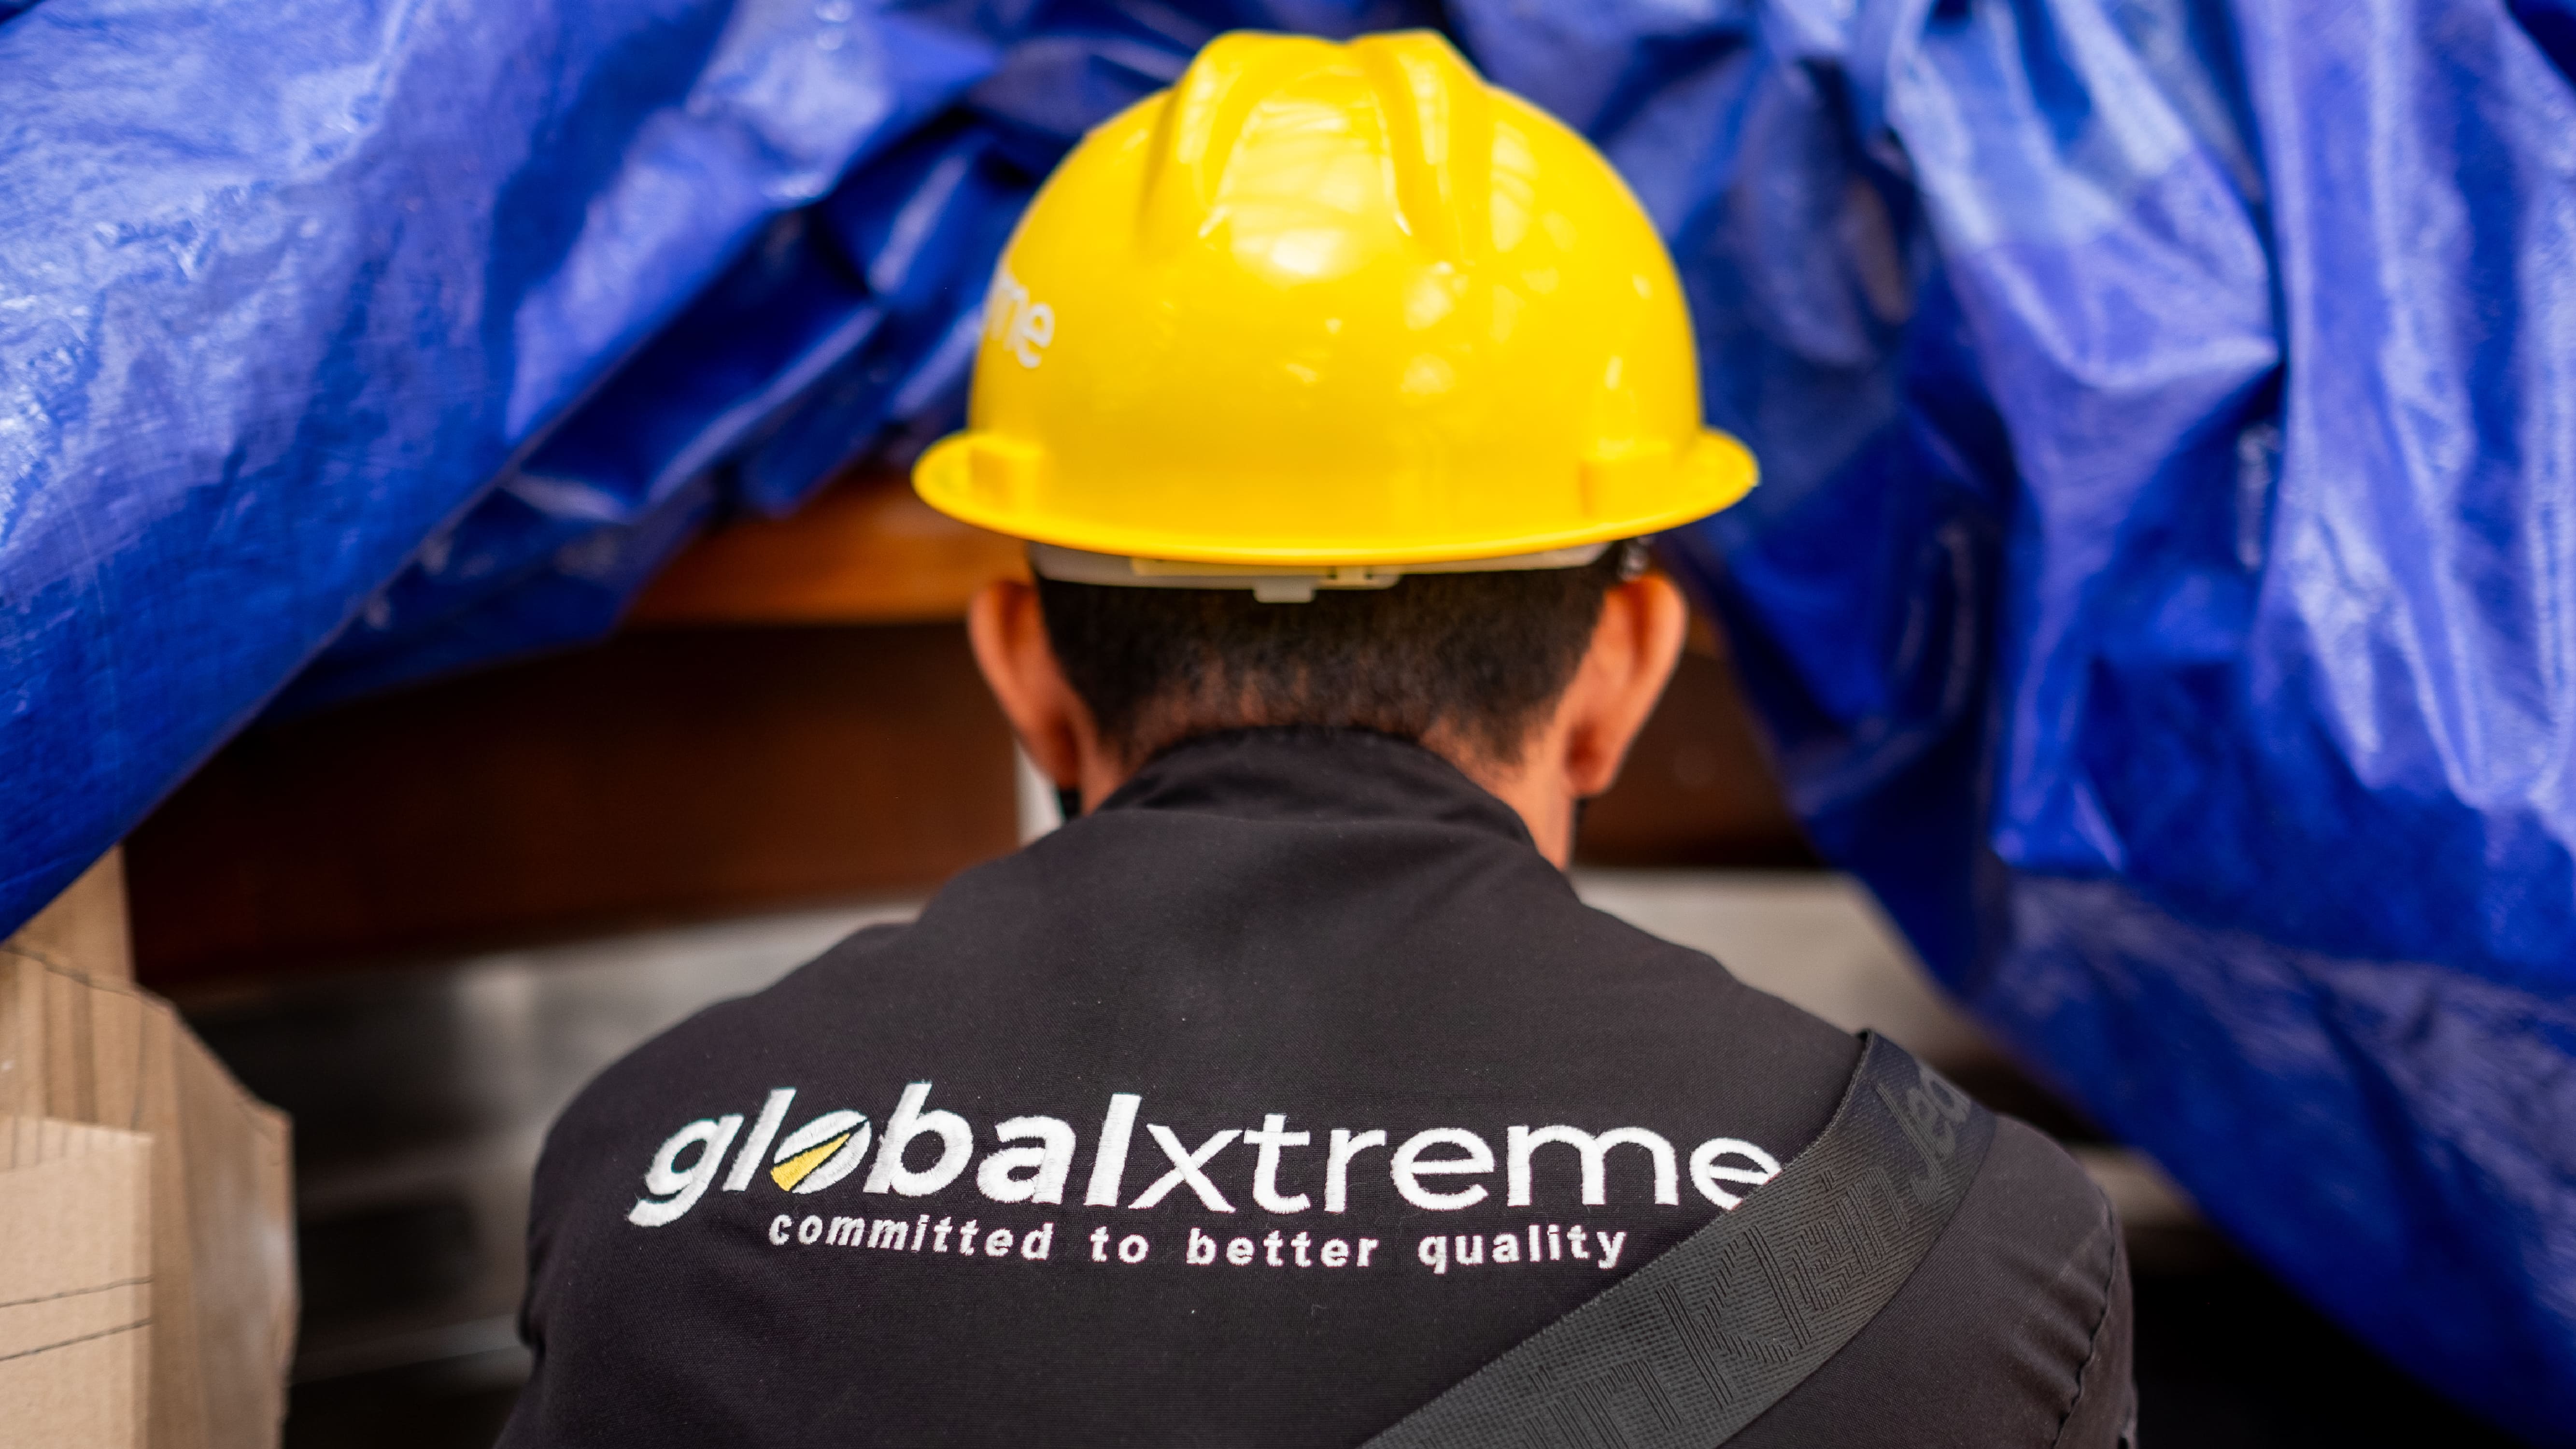 globalxtreme customize service